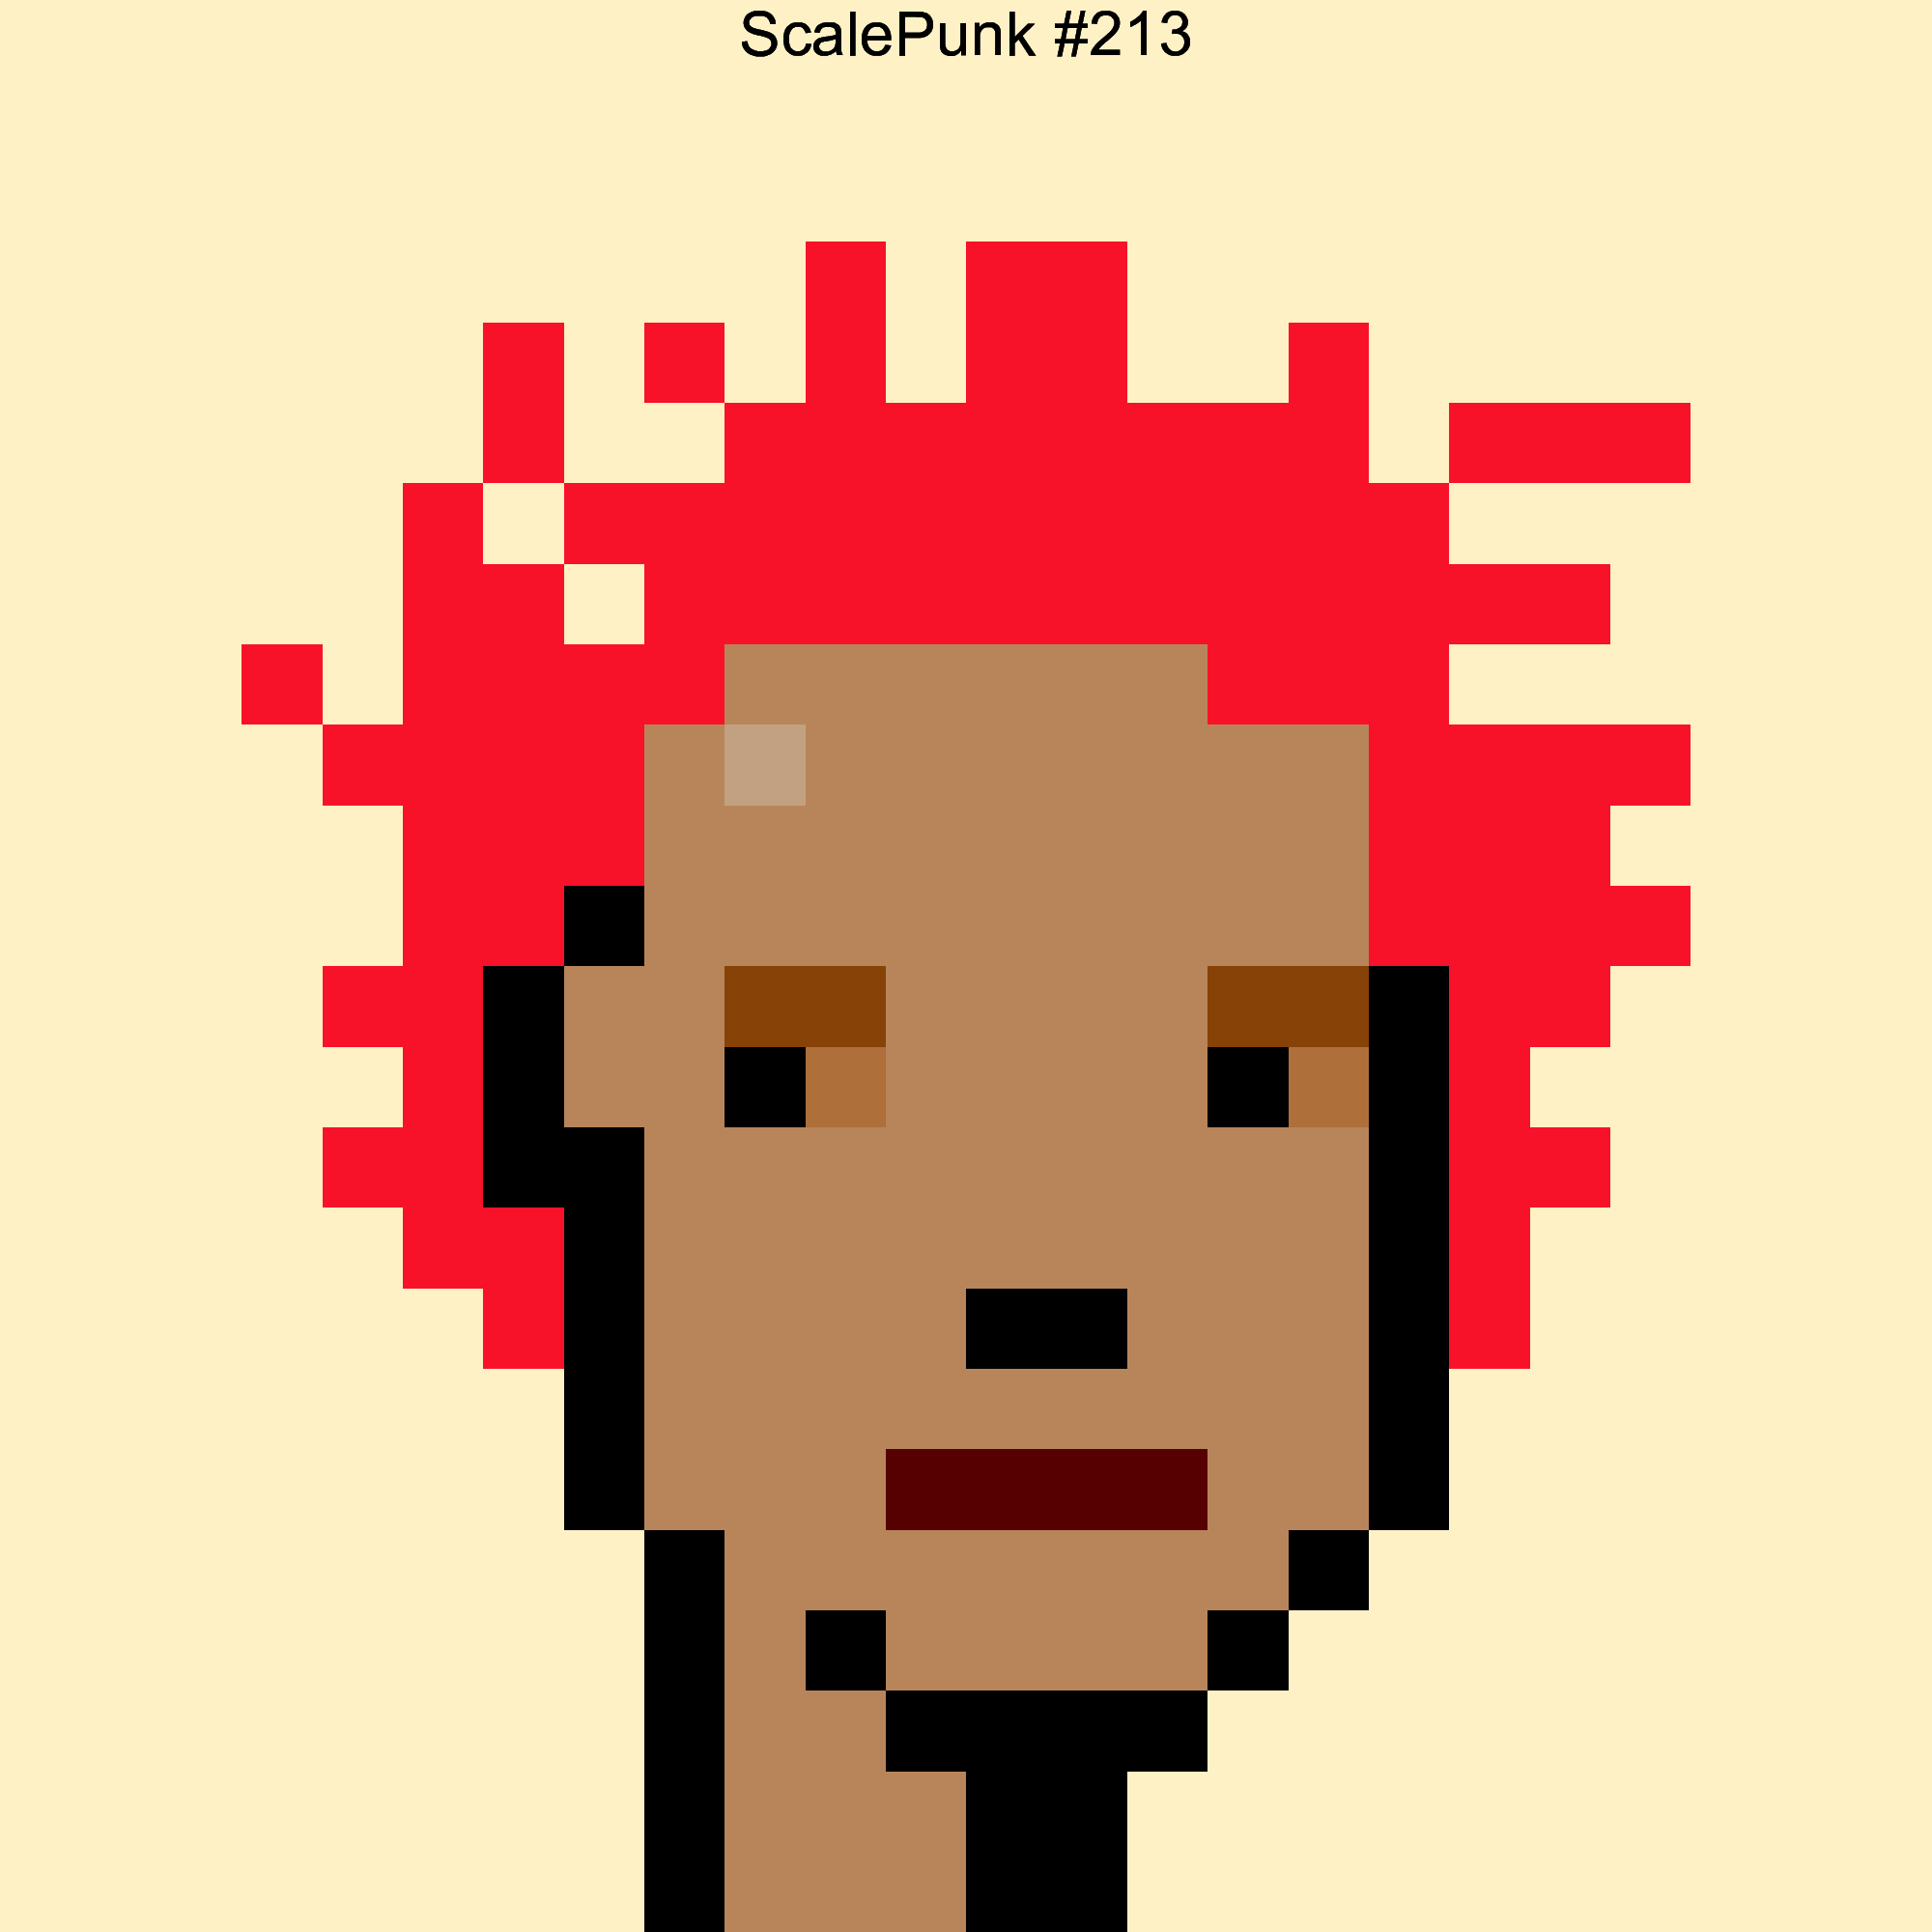 Punk 213